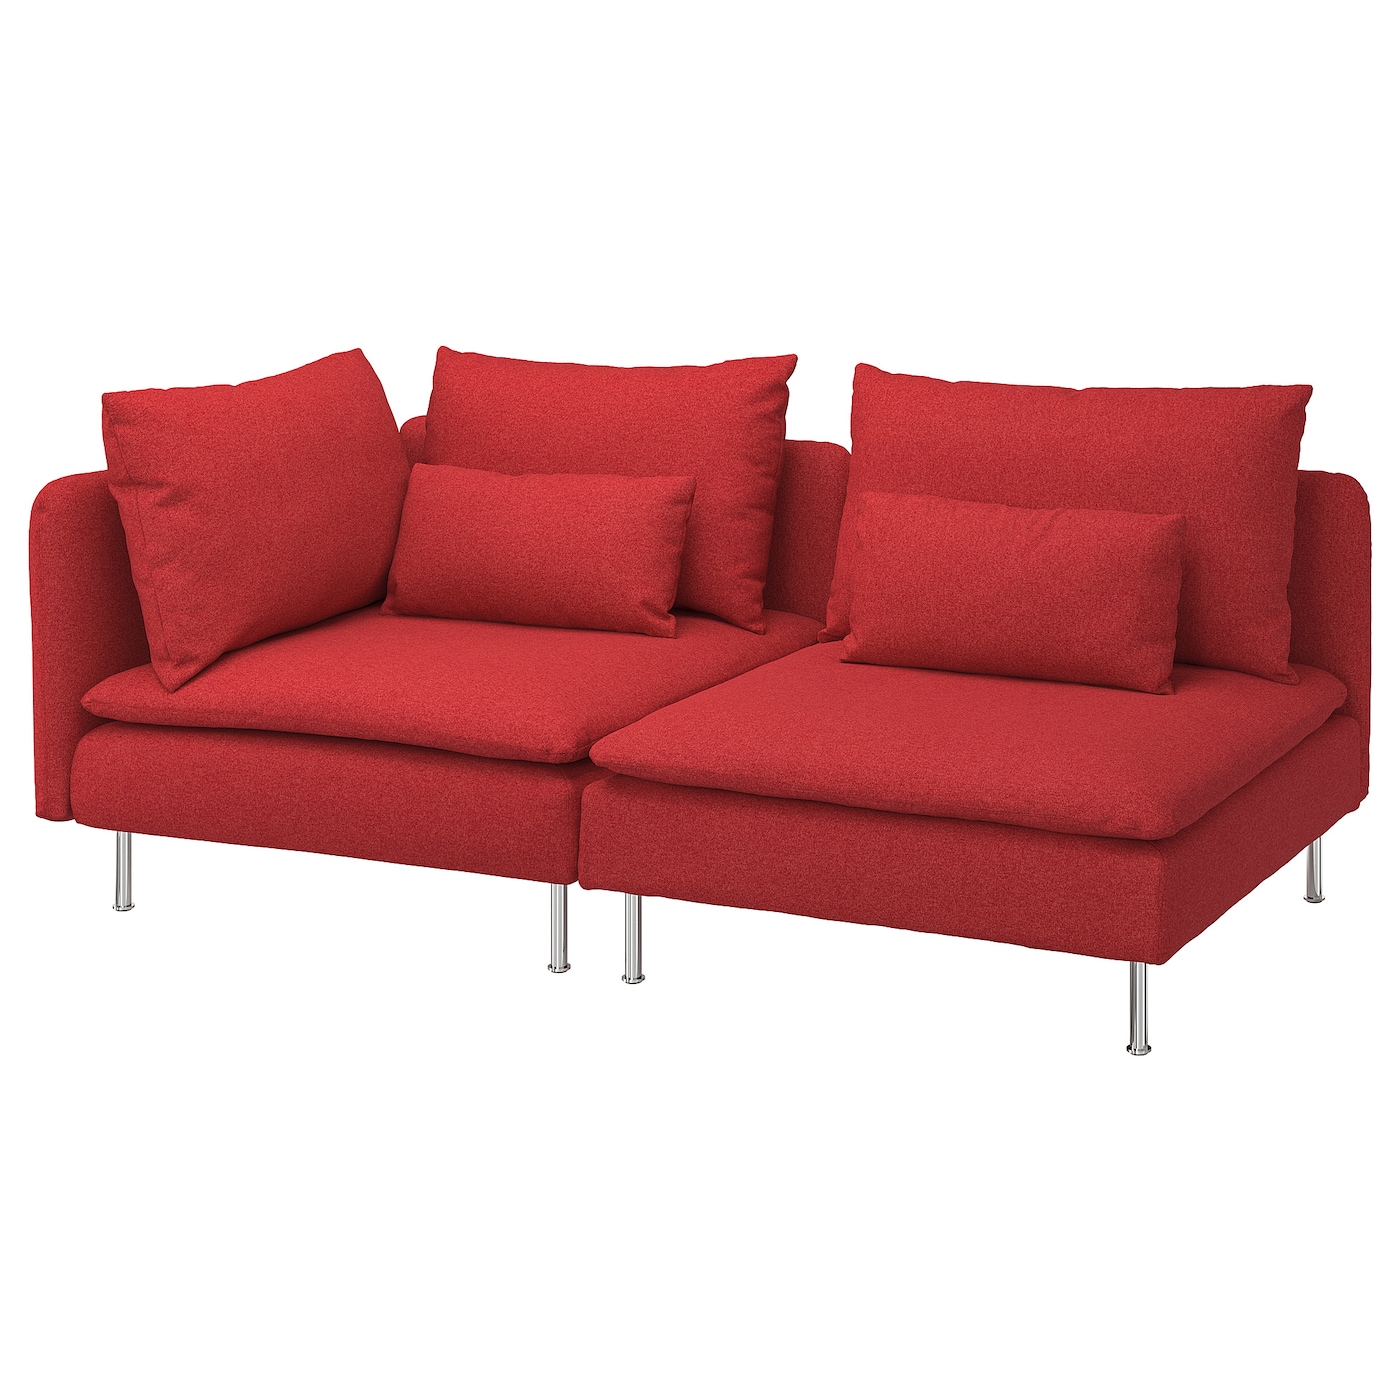 3-местный диван - IKEA SÖDERHAMN/SODERHAMN/СЁДЕРХАМН ИКЕА, 83х69х192 см, красный